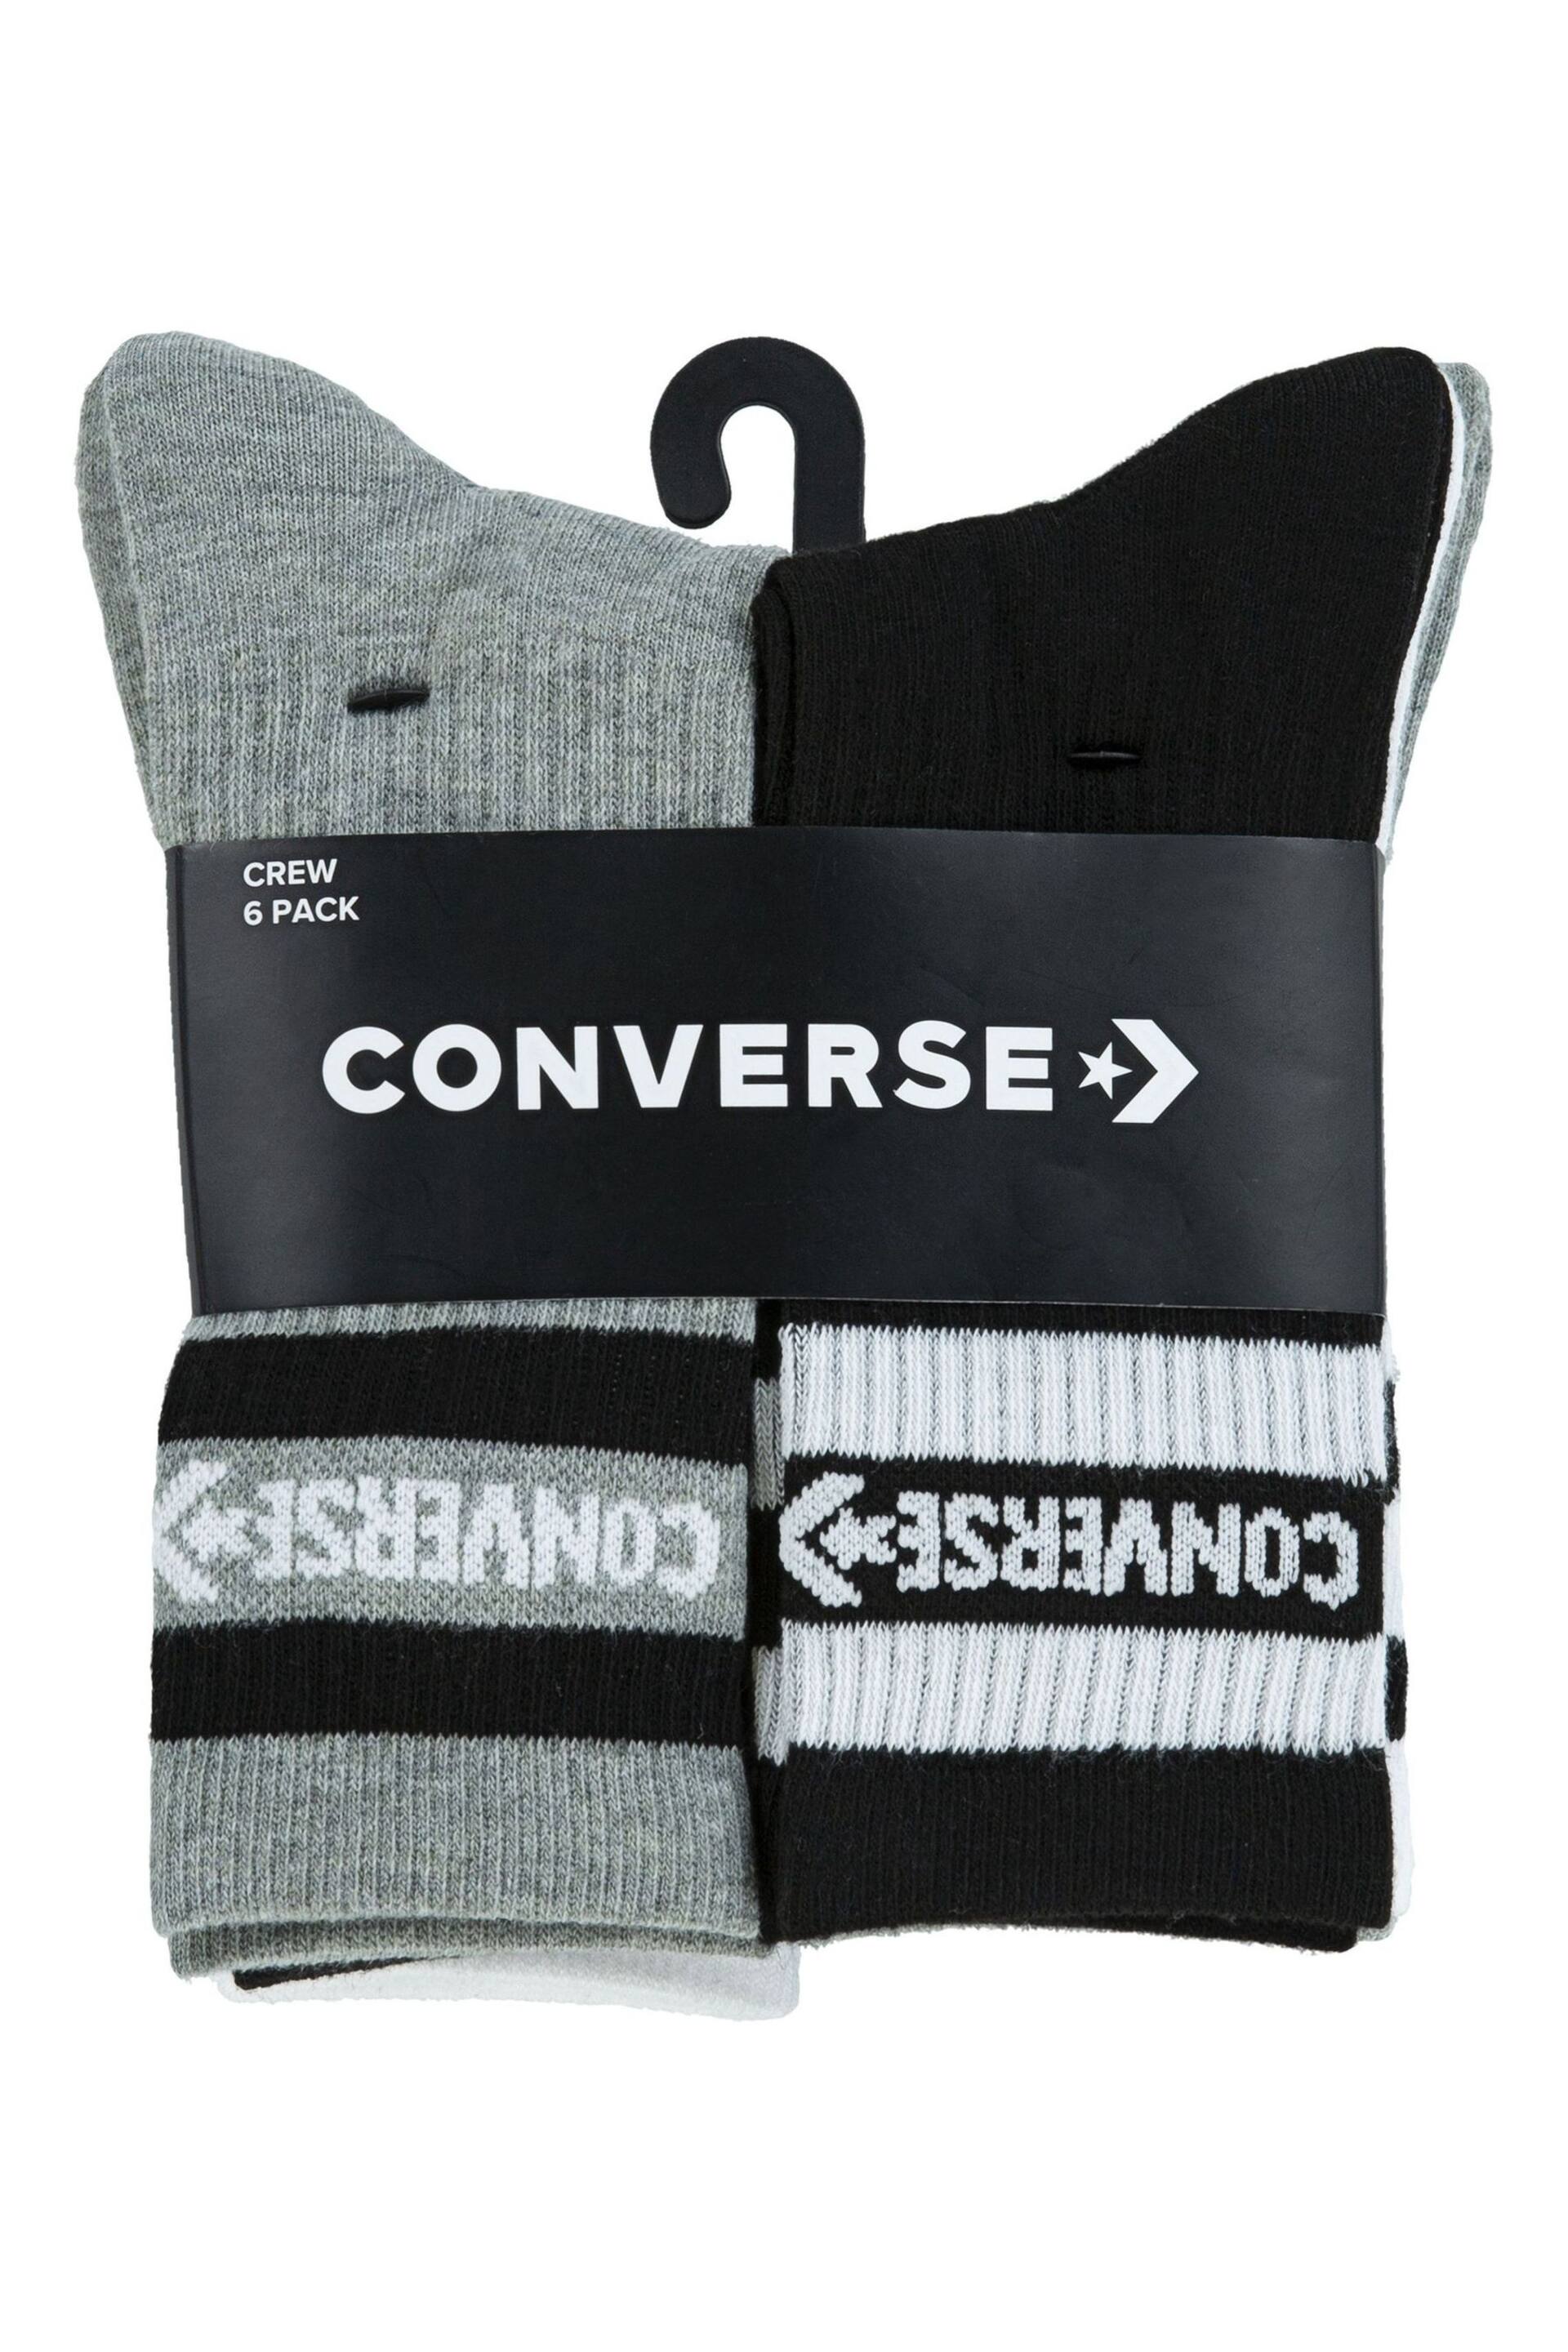 Converse Grey Crew Sock 6 Pack - Image 3 of 3